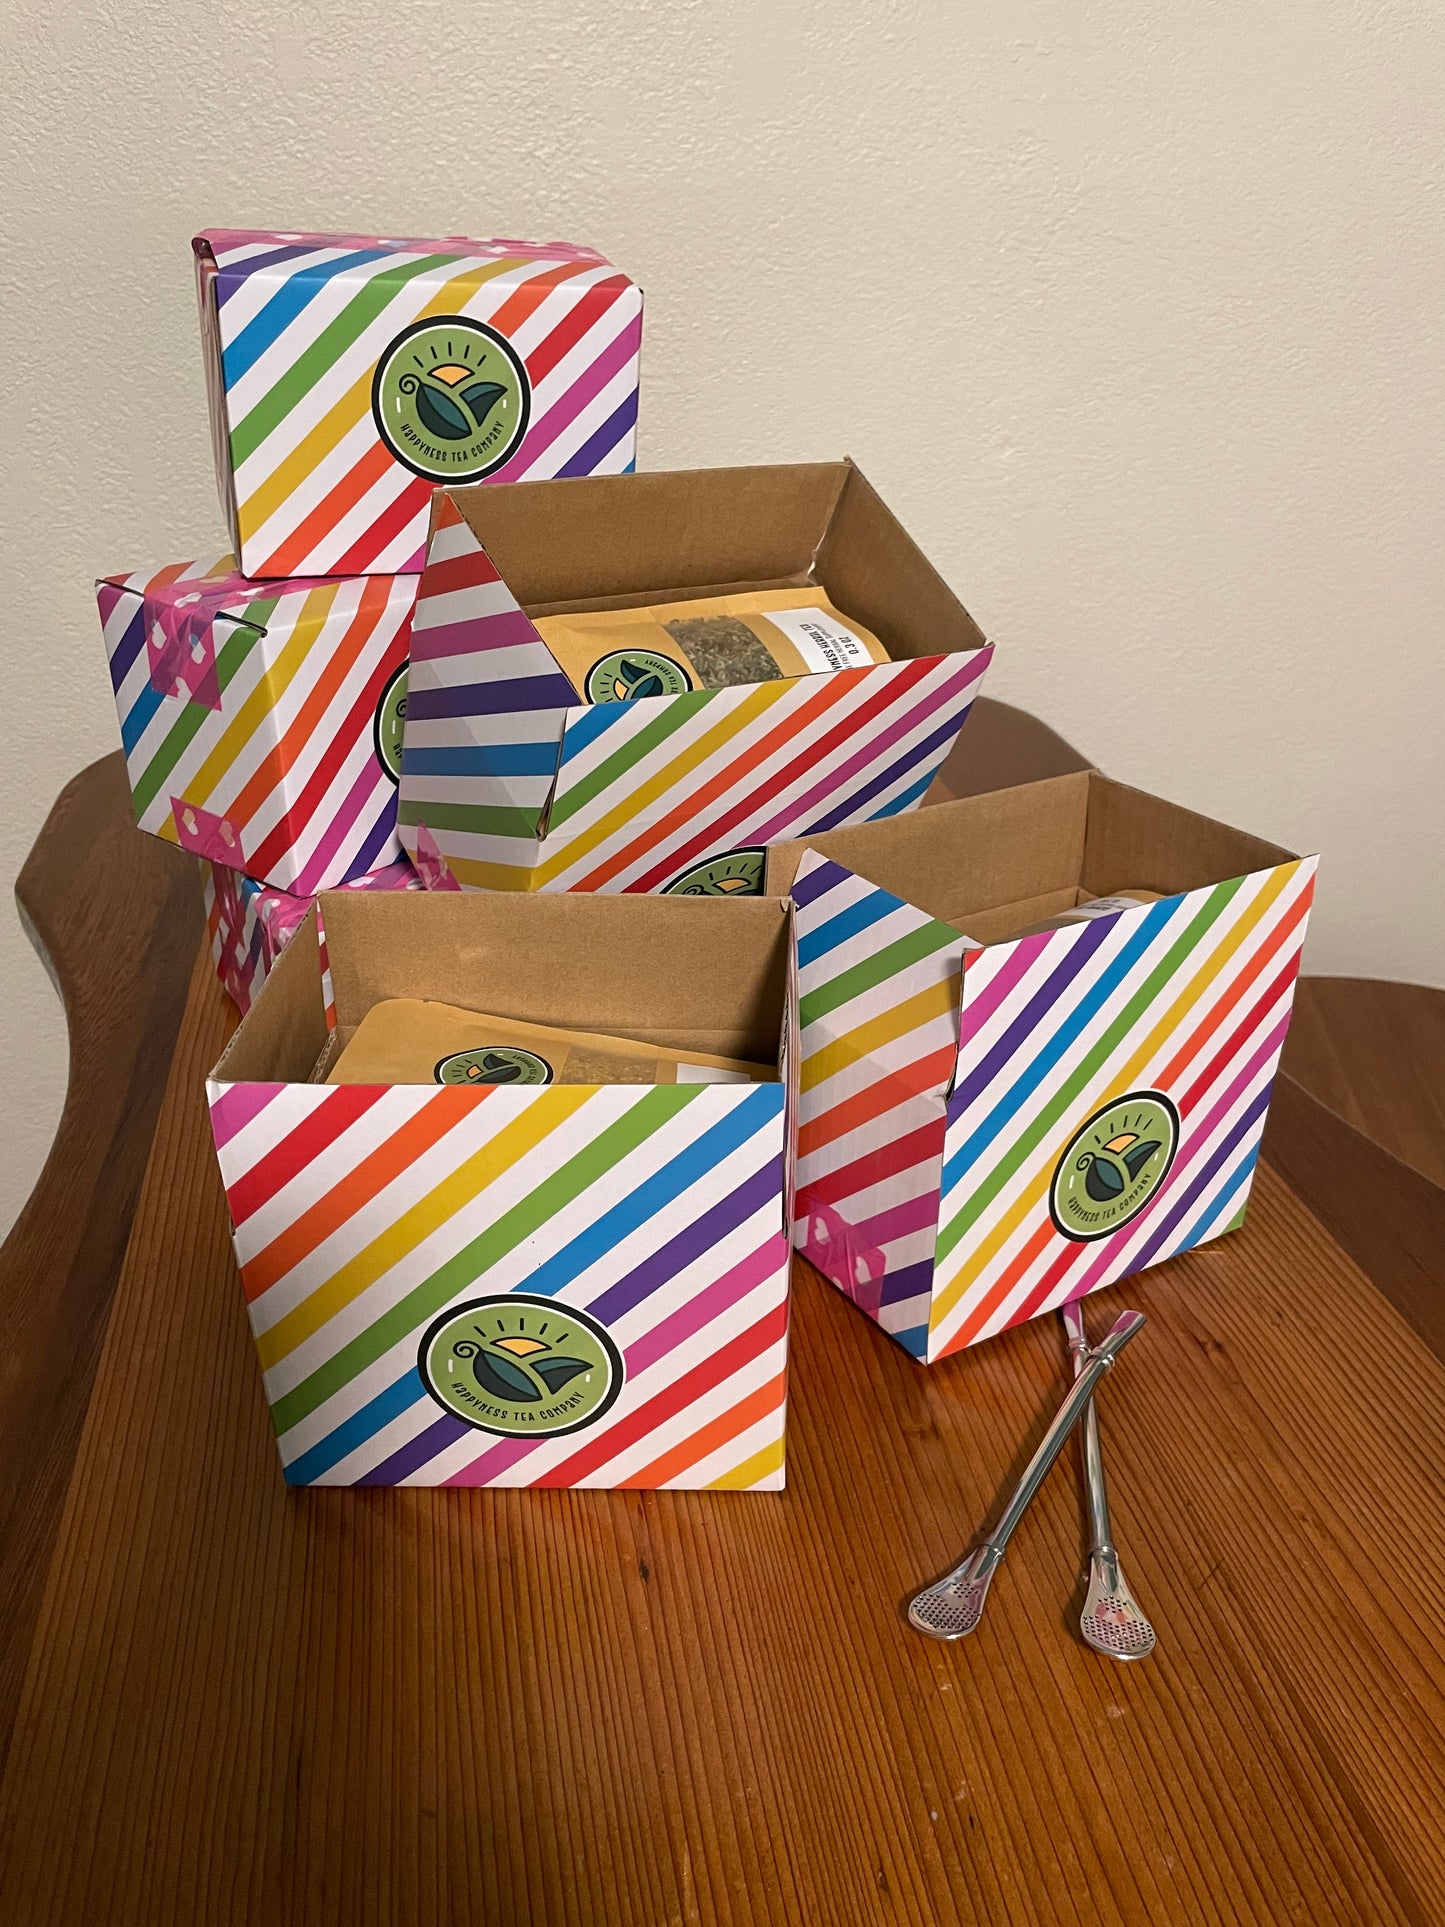 Tea Lovers Gift Box -12 Teas and 2 Bombillas